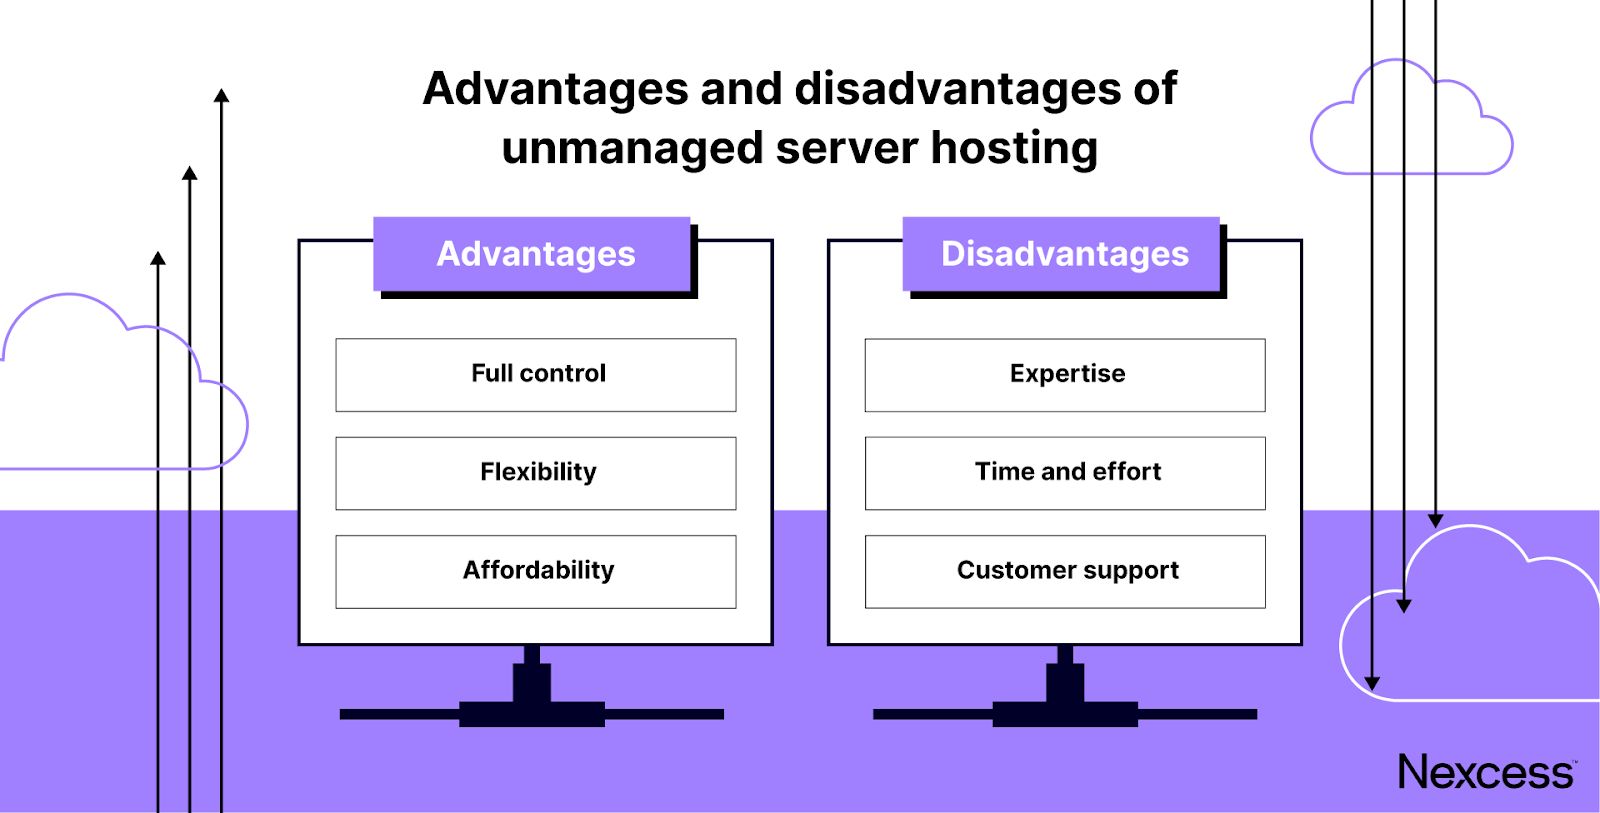 The advantages and disadvantages of unmanaged server hosting.